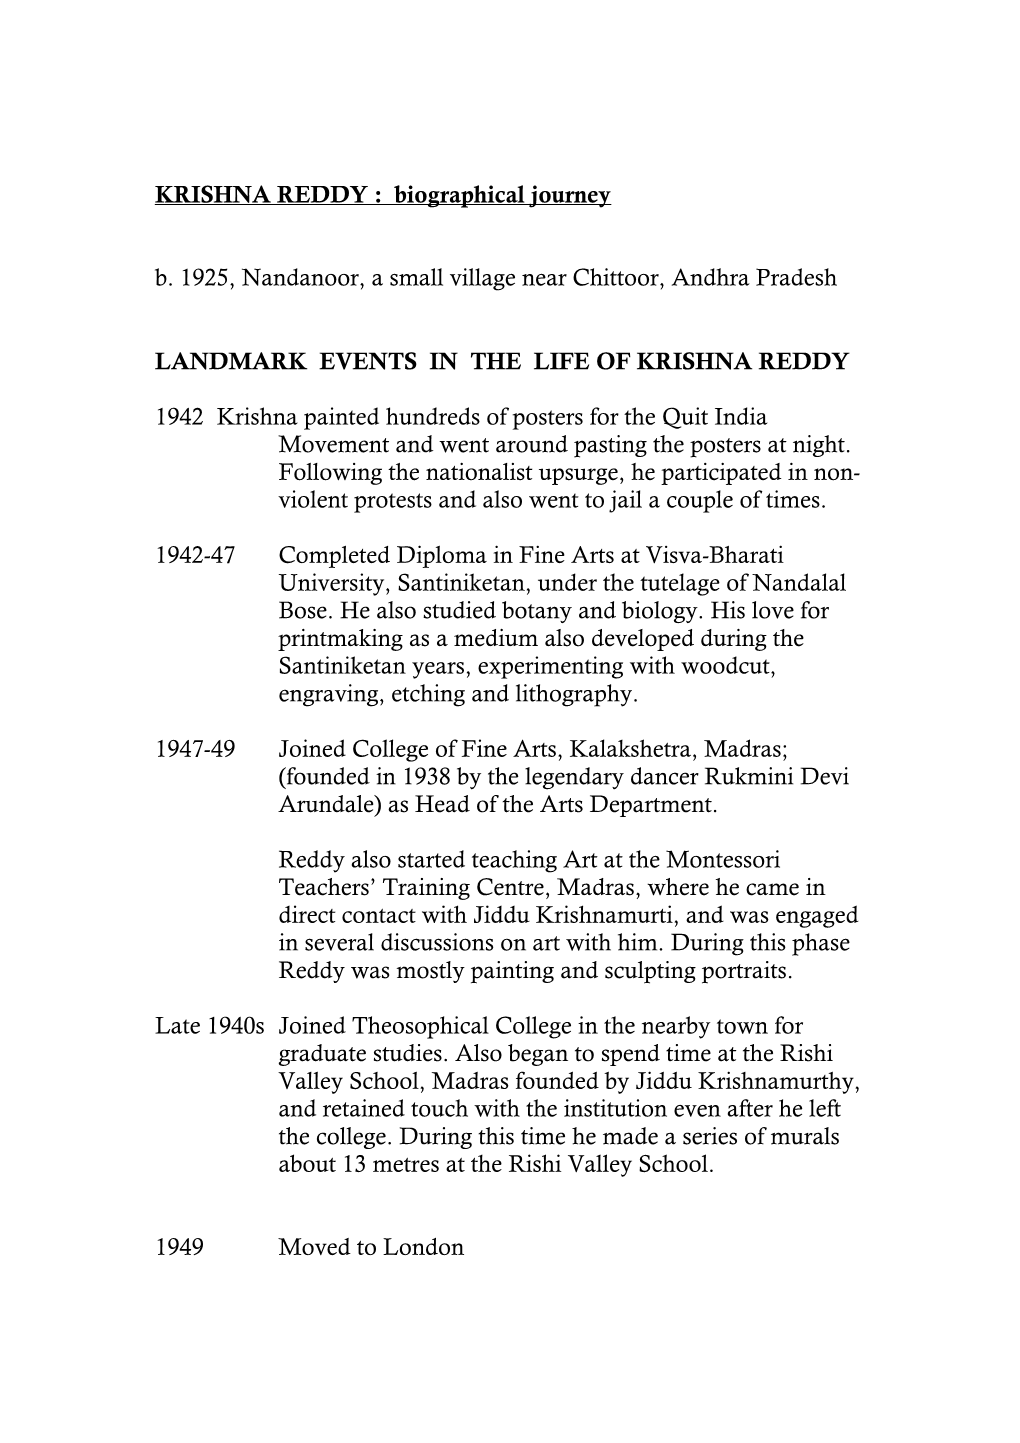 KRISHNA REDDY – a Biographical Journey